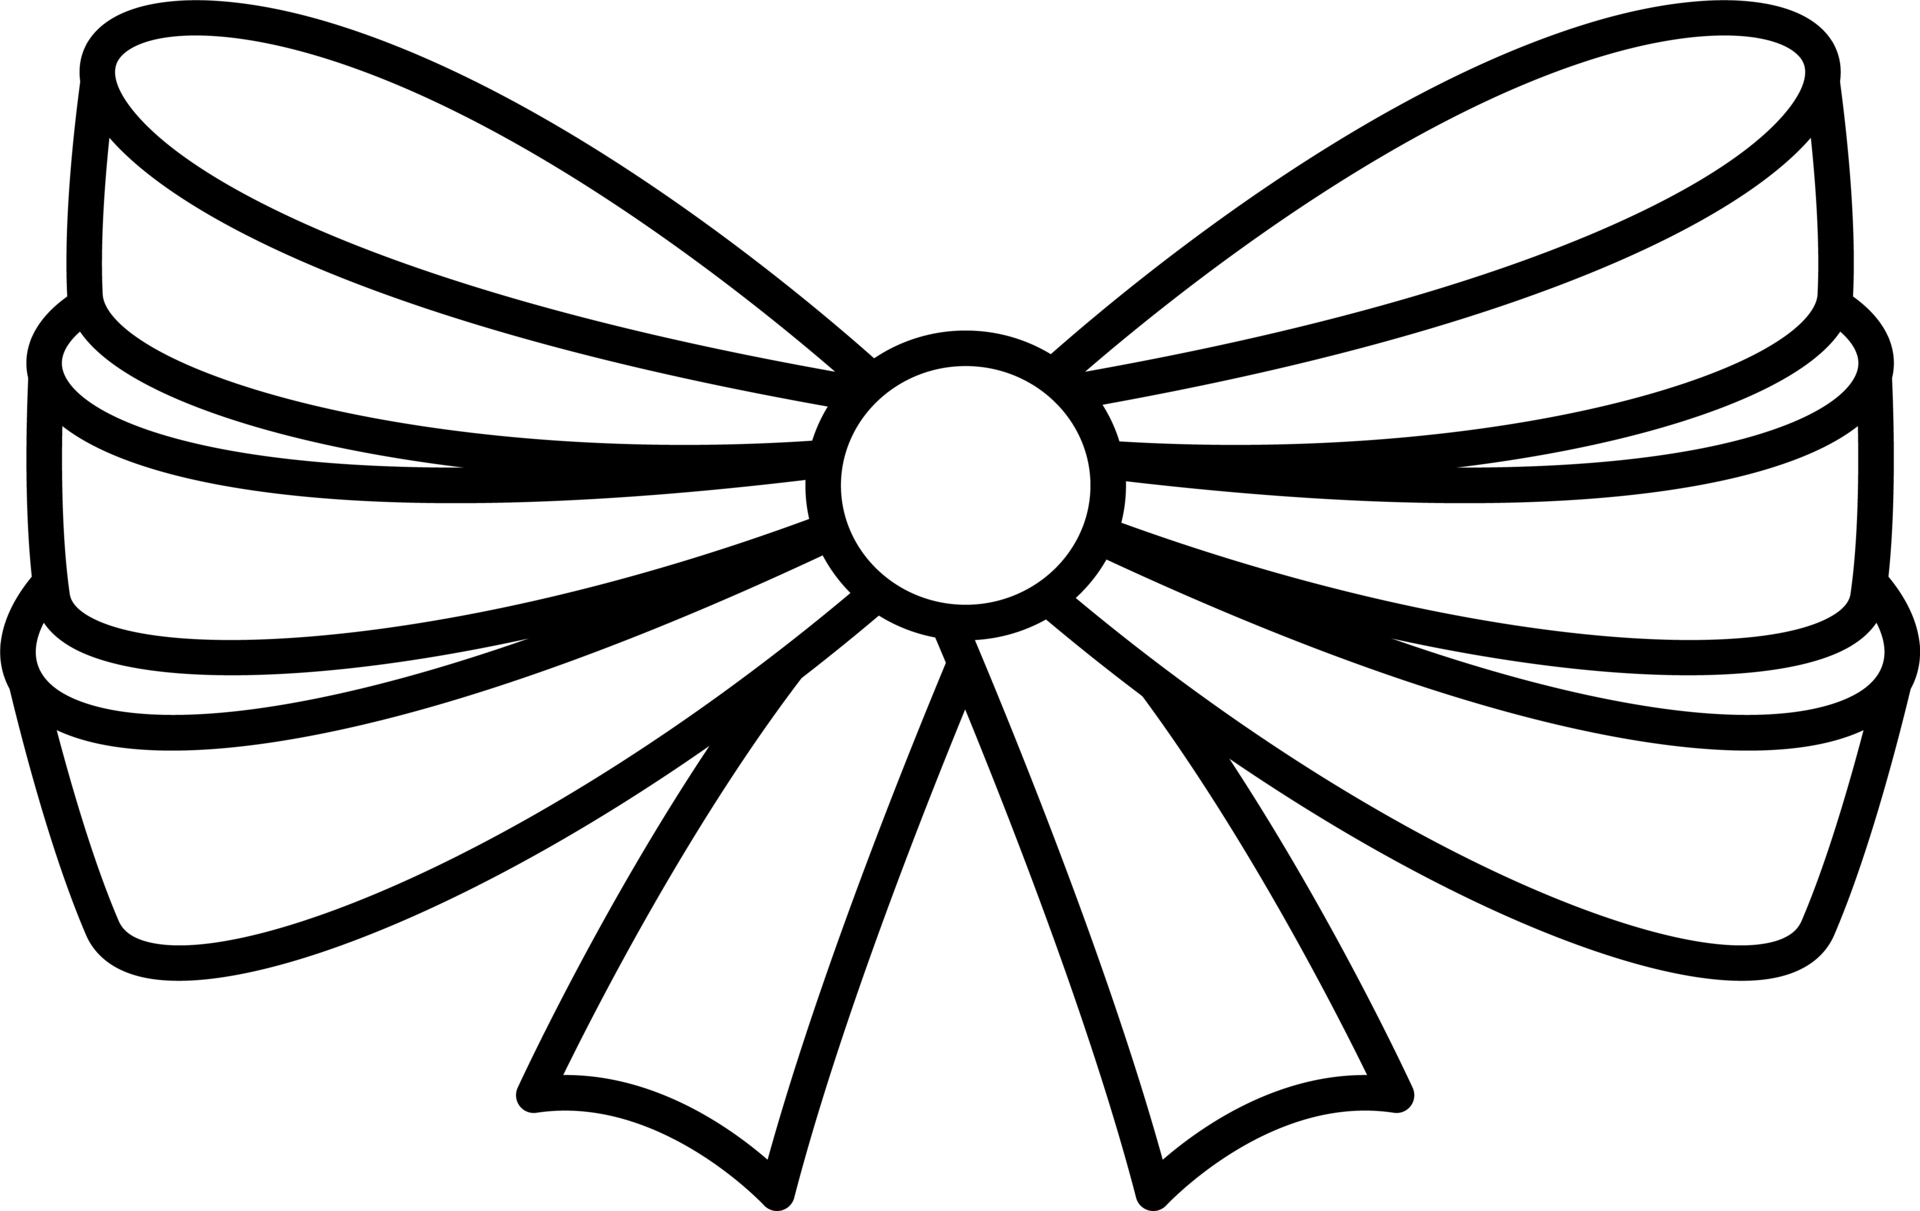 Black Ribbon bow on transparent background PNG.png - Similar PNG